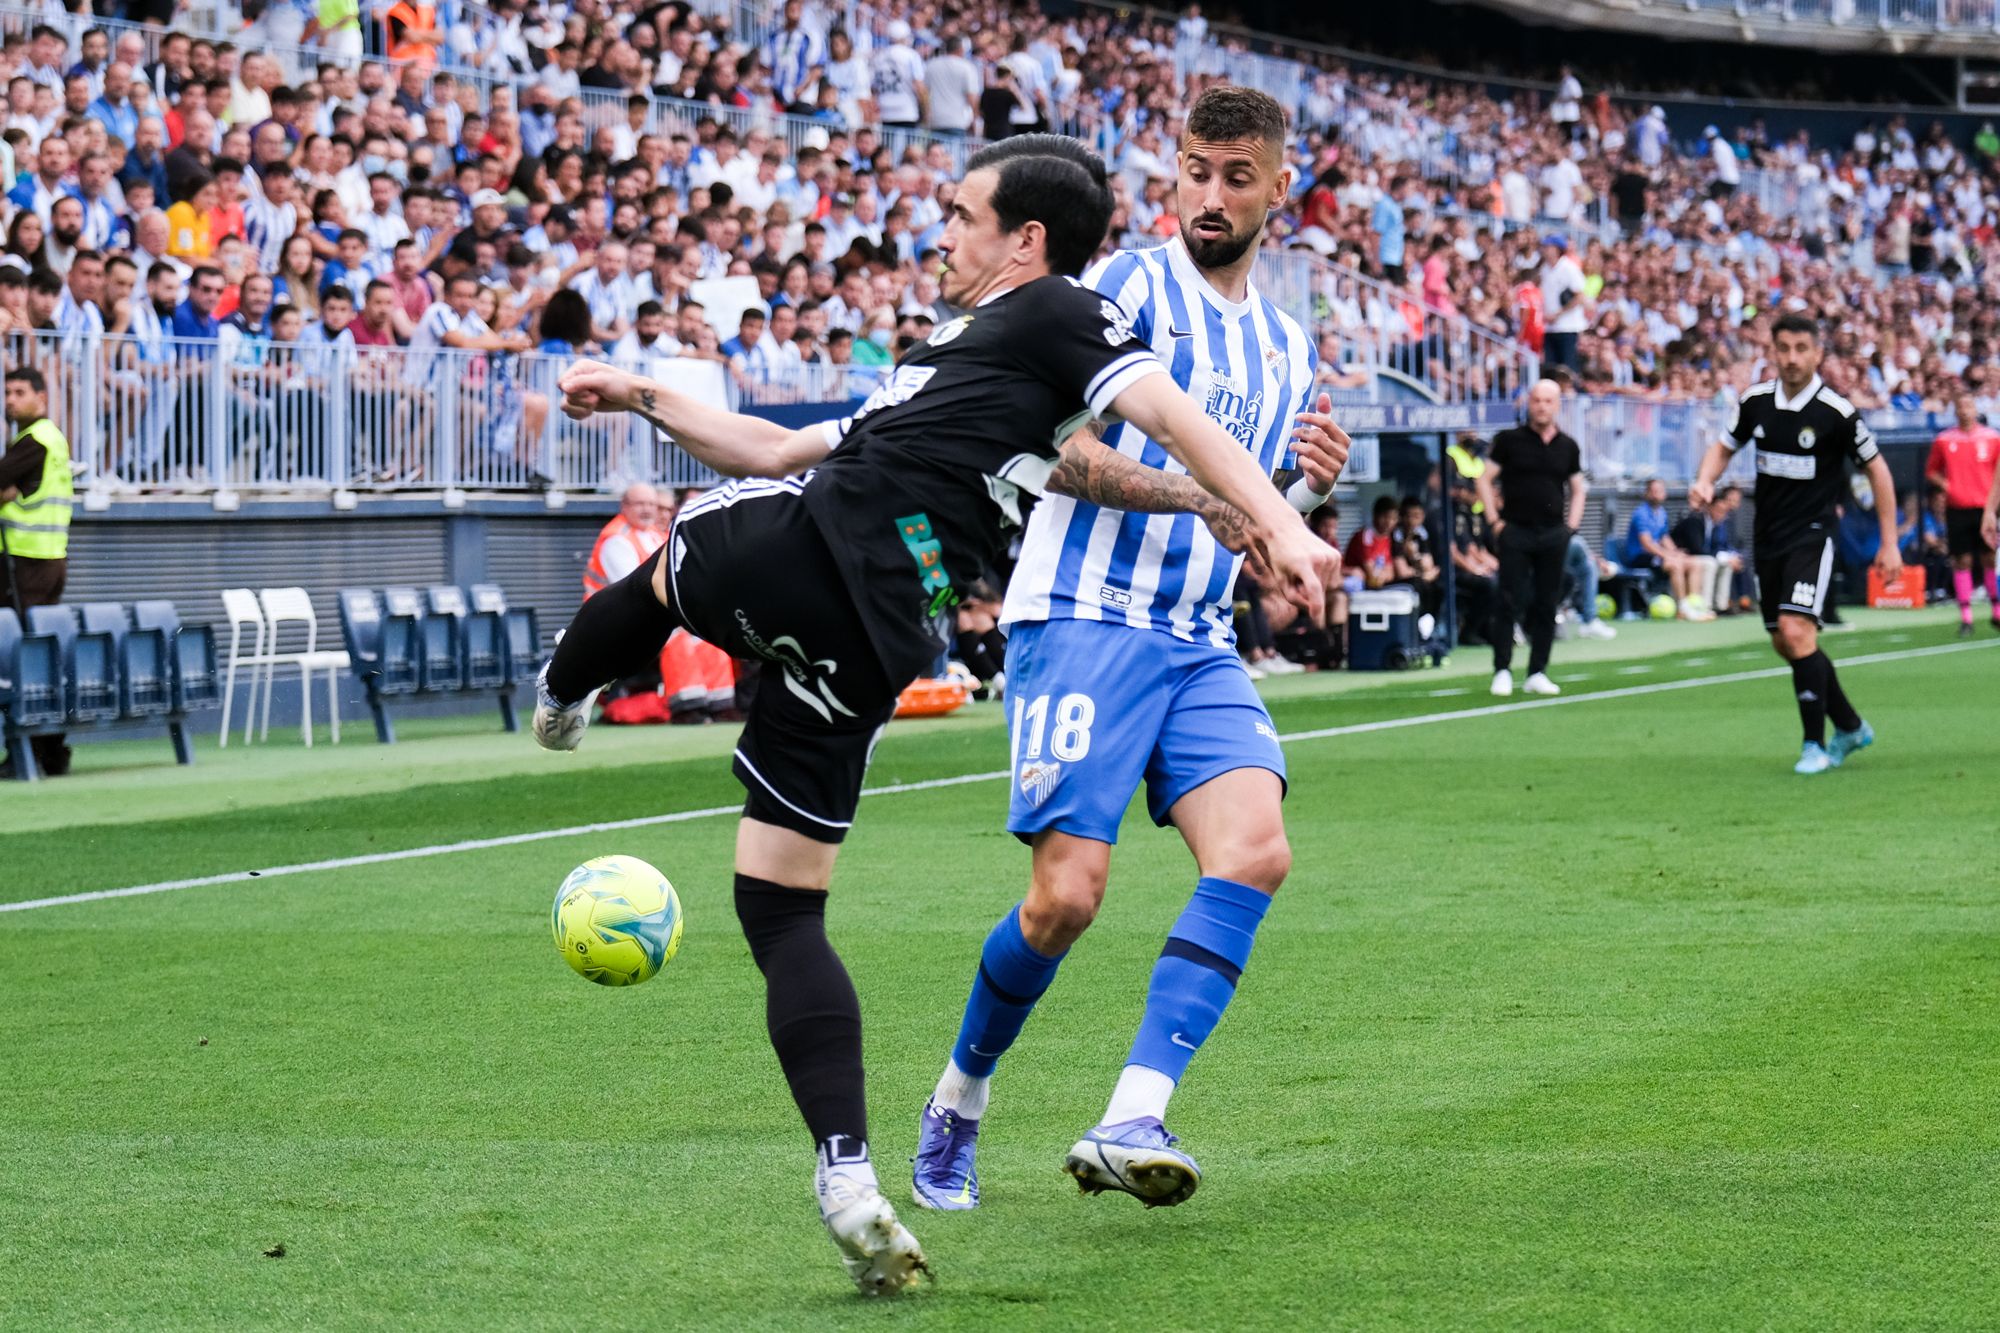 Liga SmartBank 2021/2022: Málaga CF - Burgos